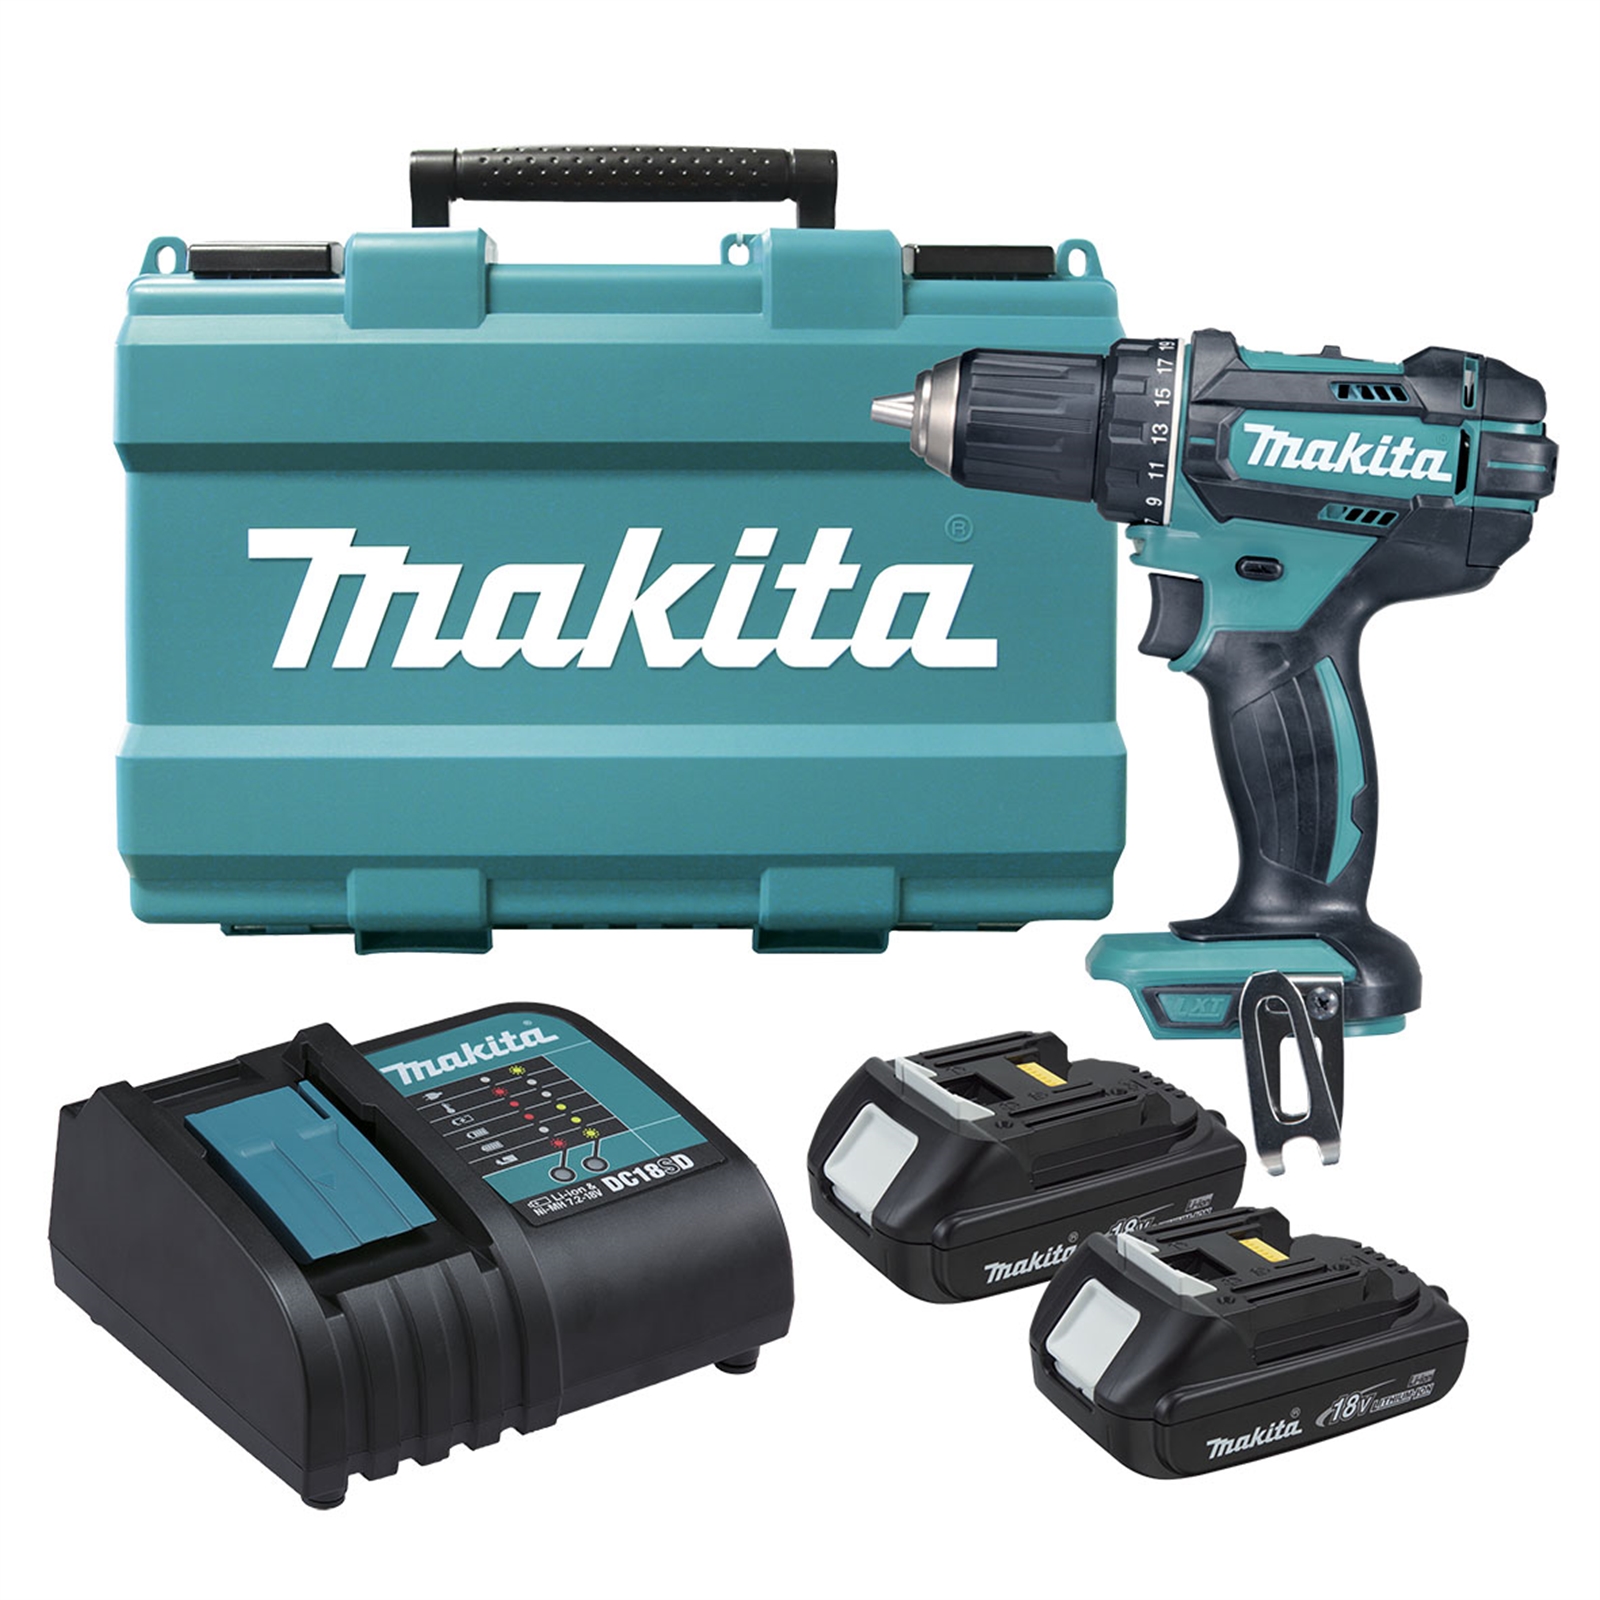 Makita 18v Li 2 x 1.5Ah Cordless Drill Driver Kit